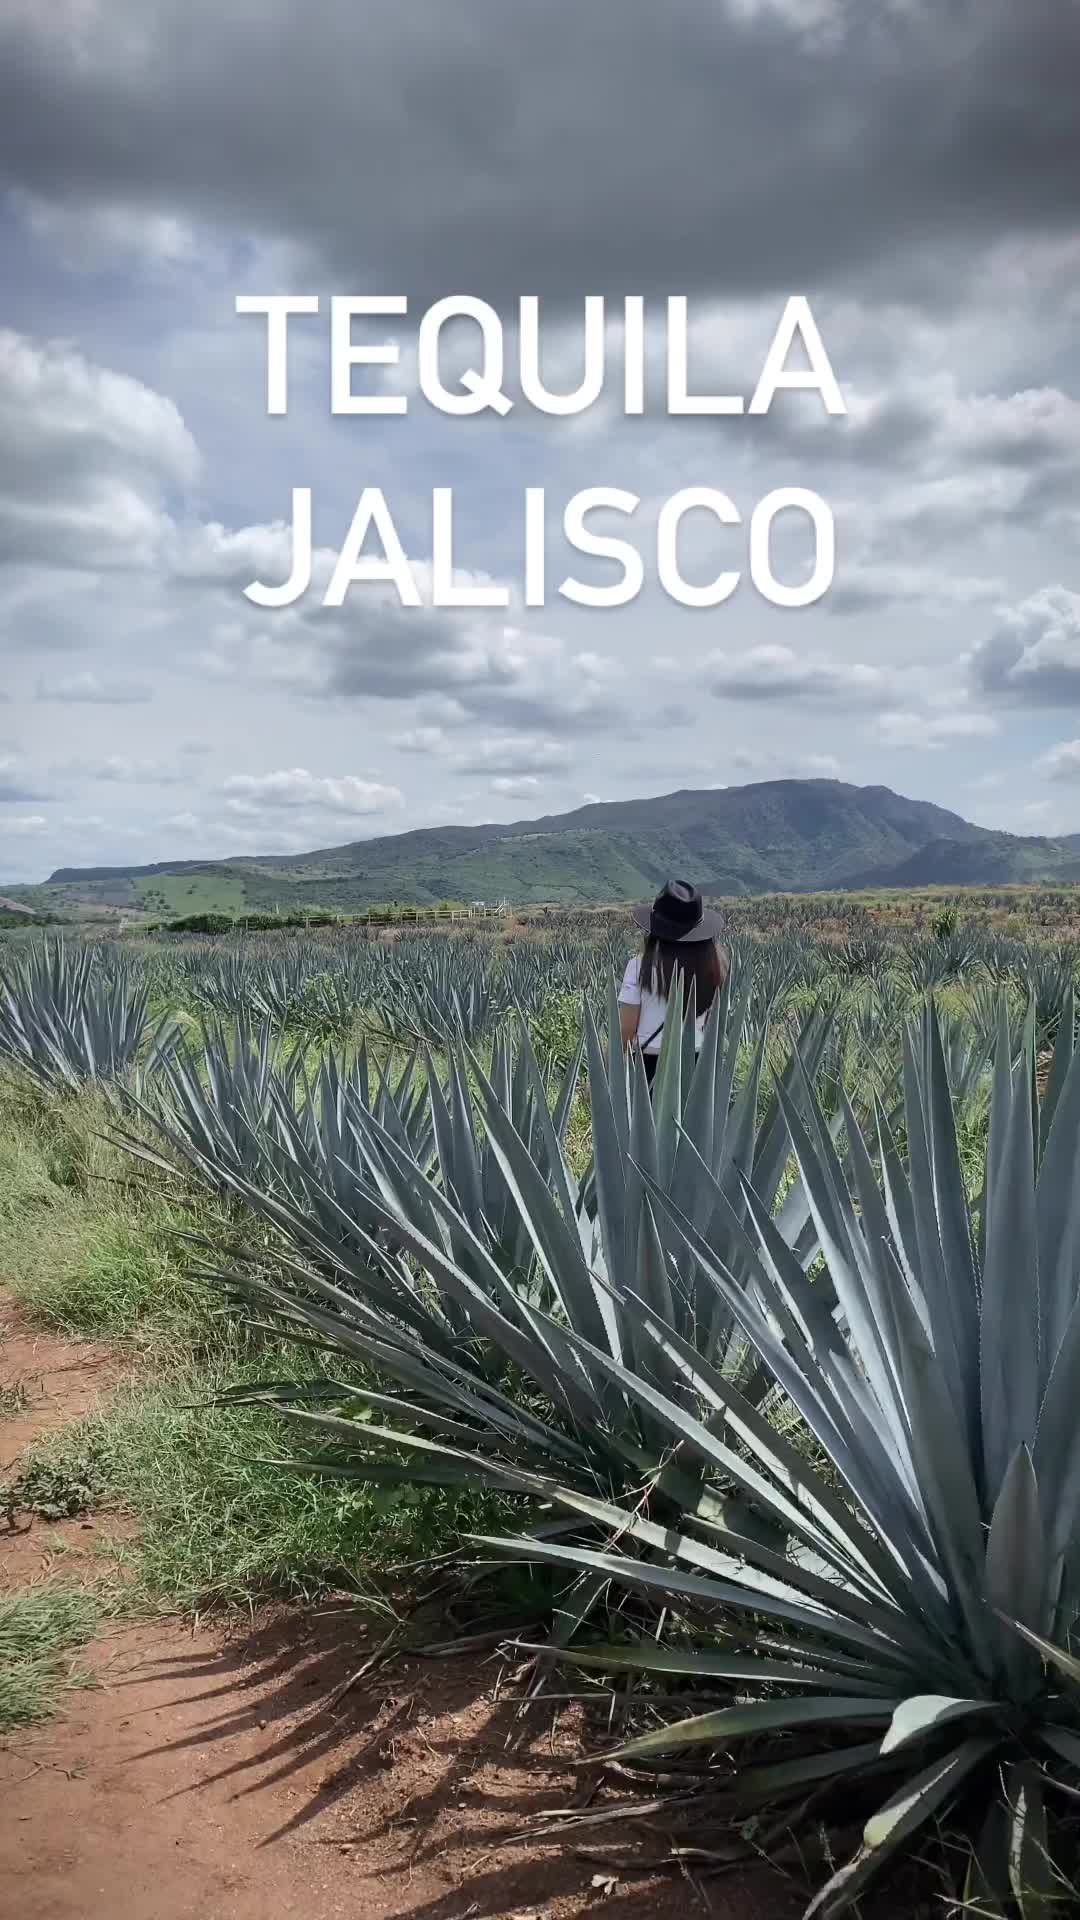 Explore Tequila, Jalisco with @jaliscomiamortours ✨